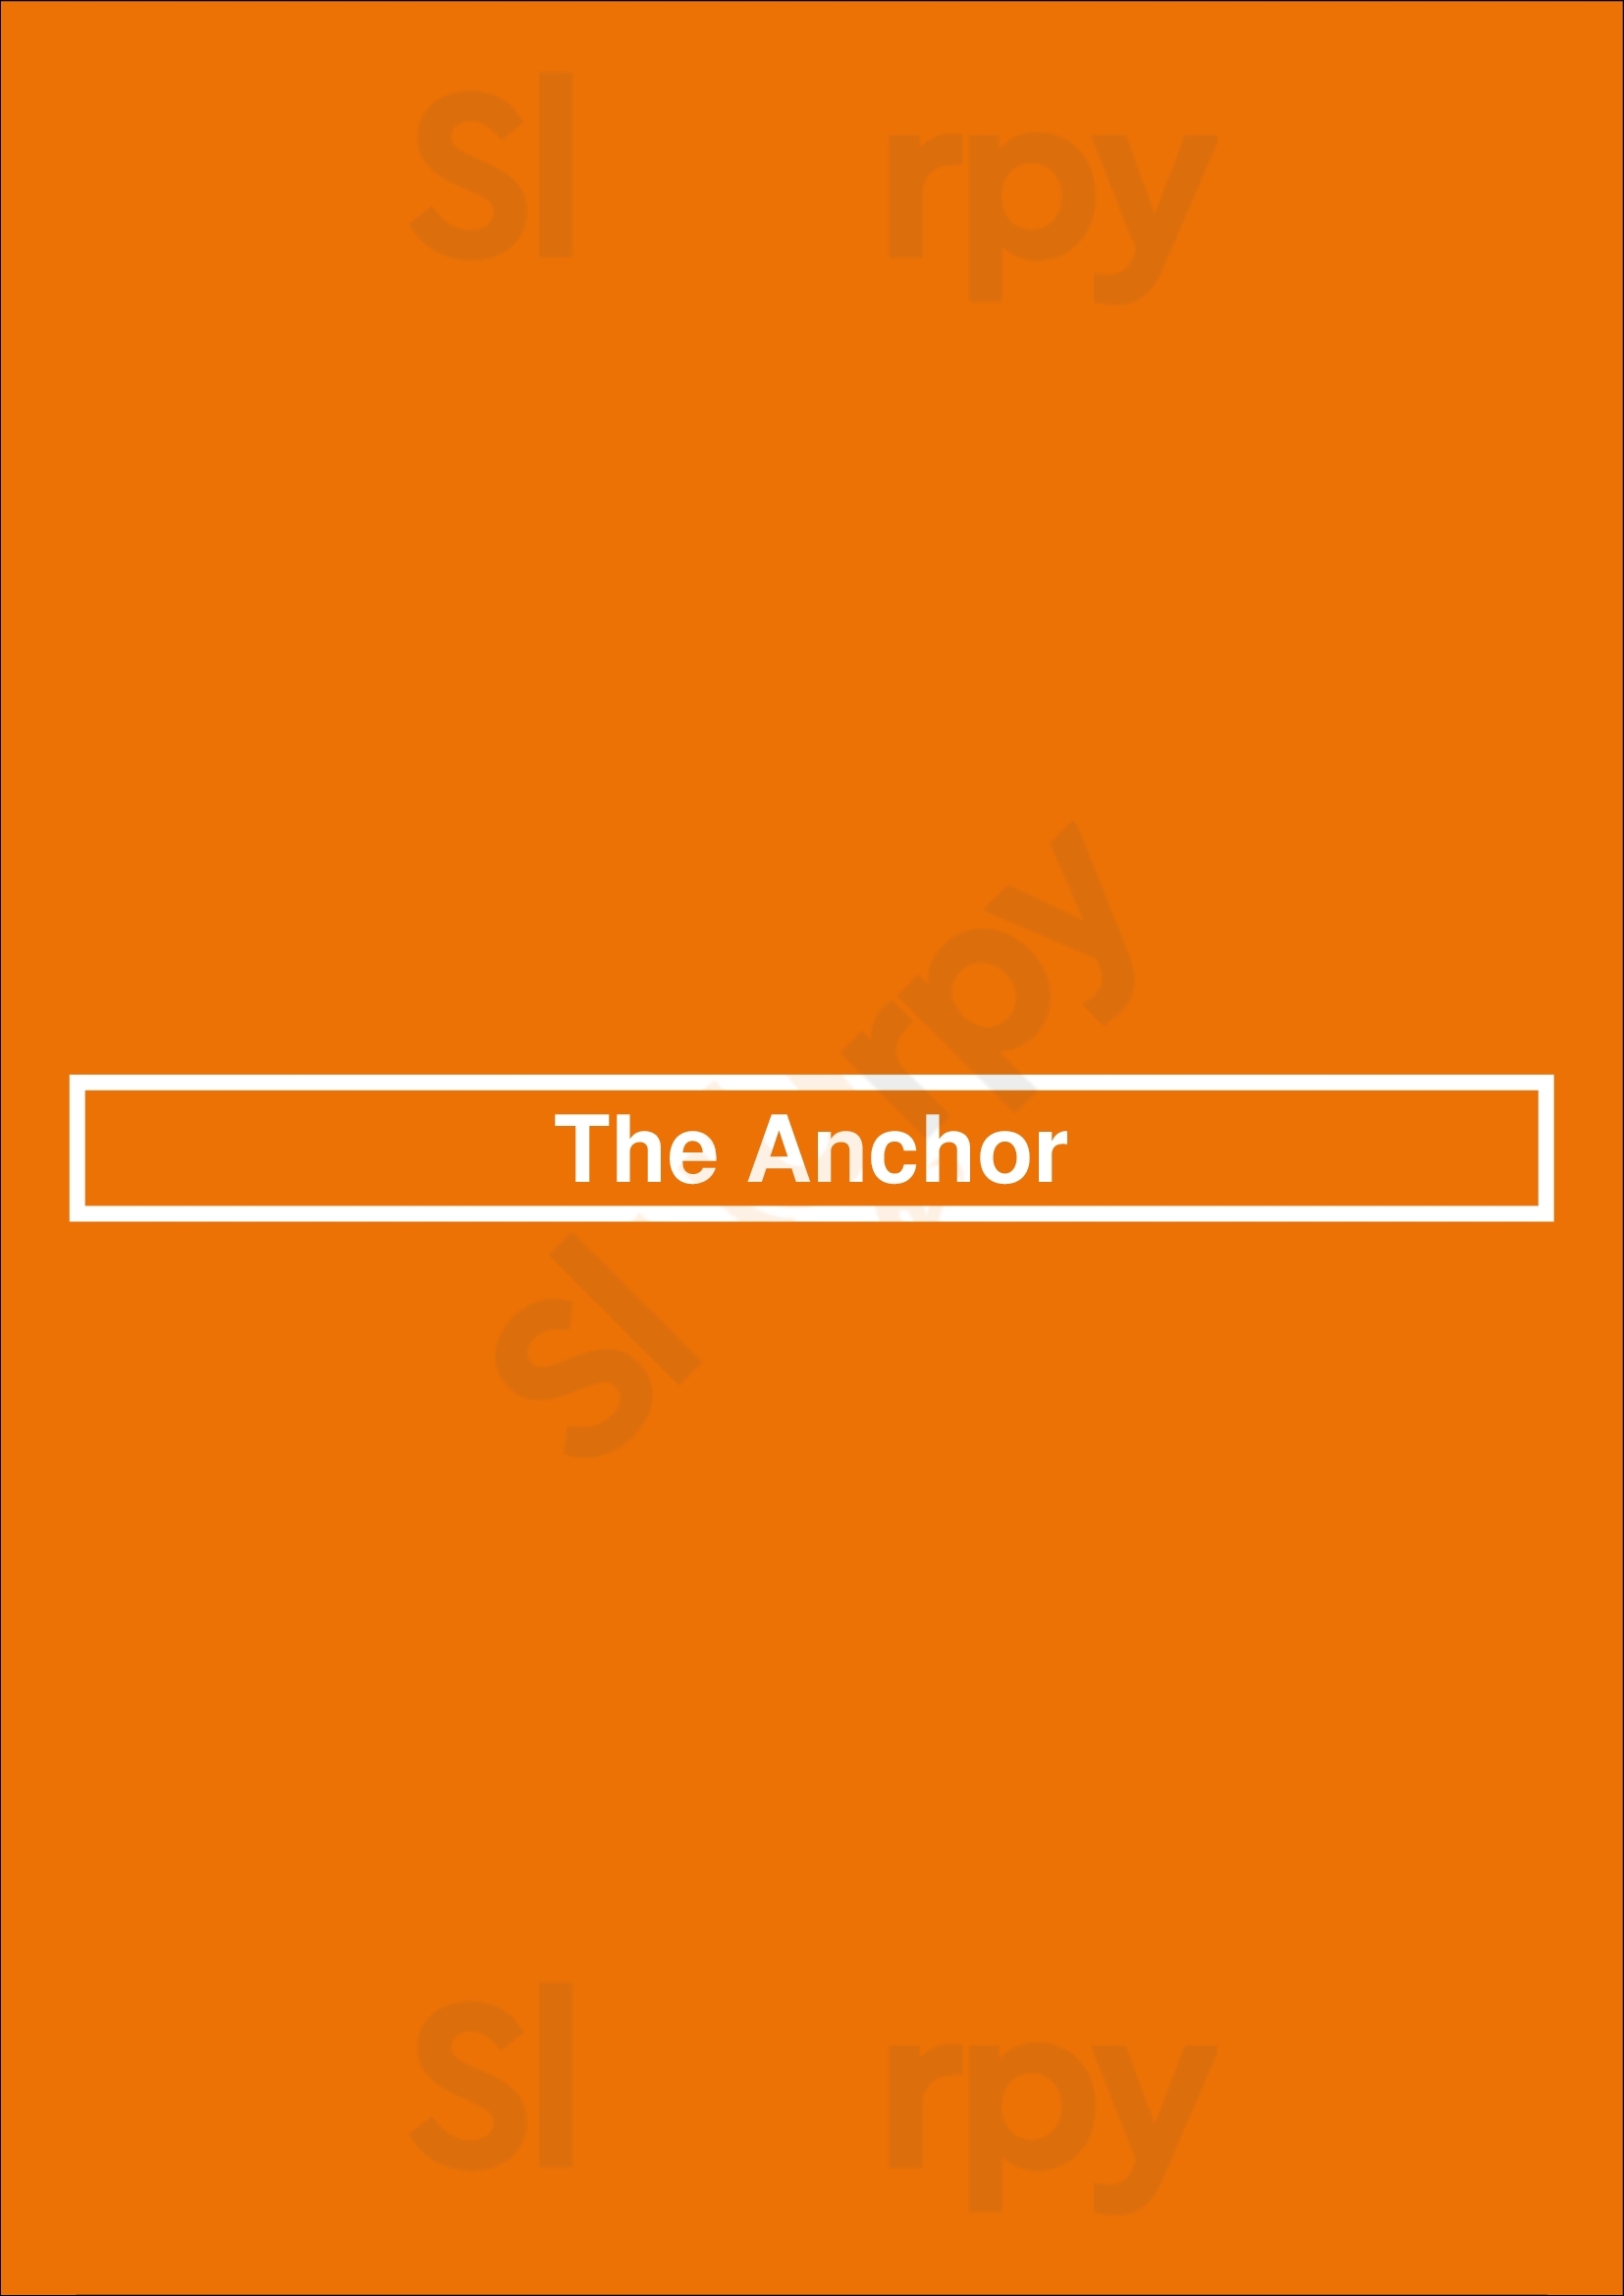 The Anchor Wichita Menu - 1